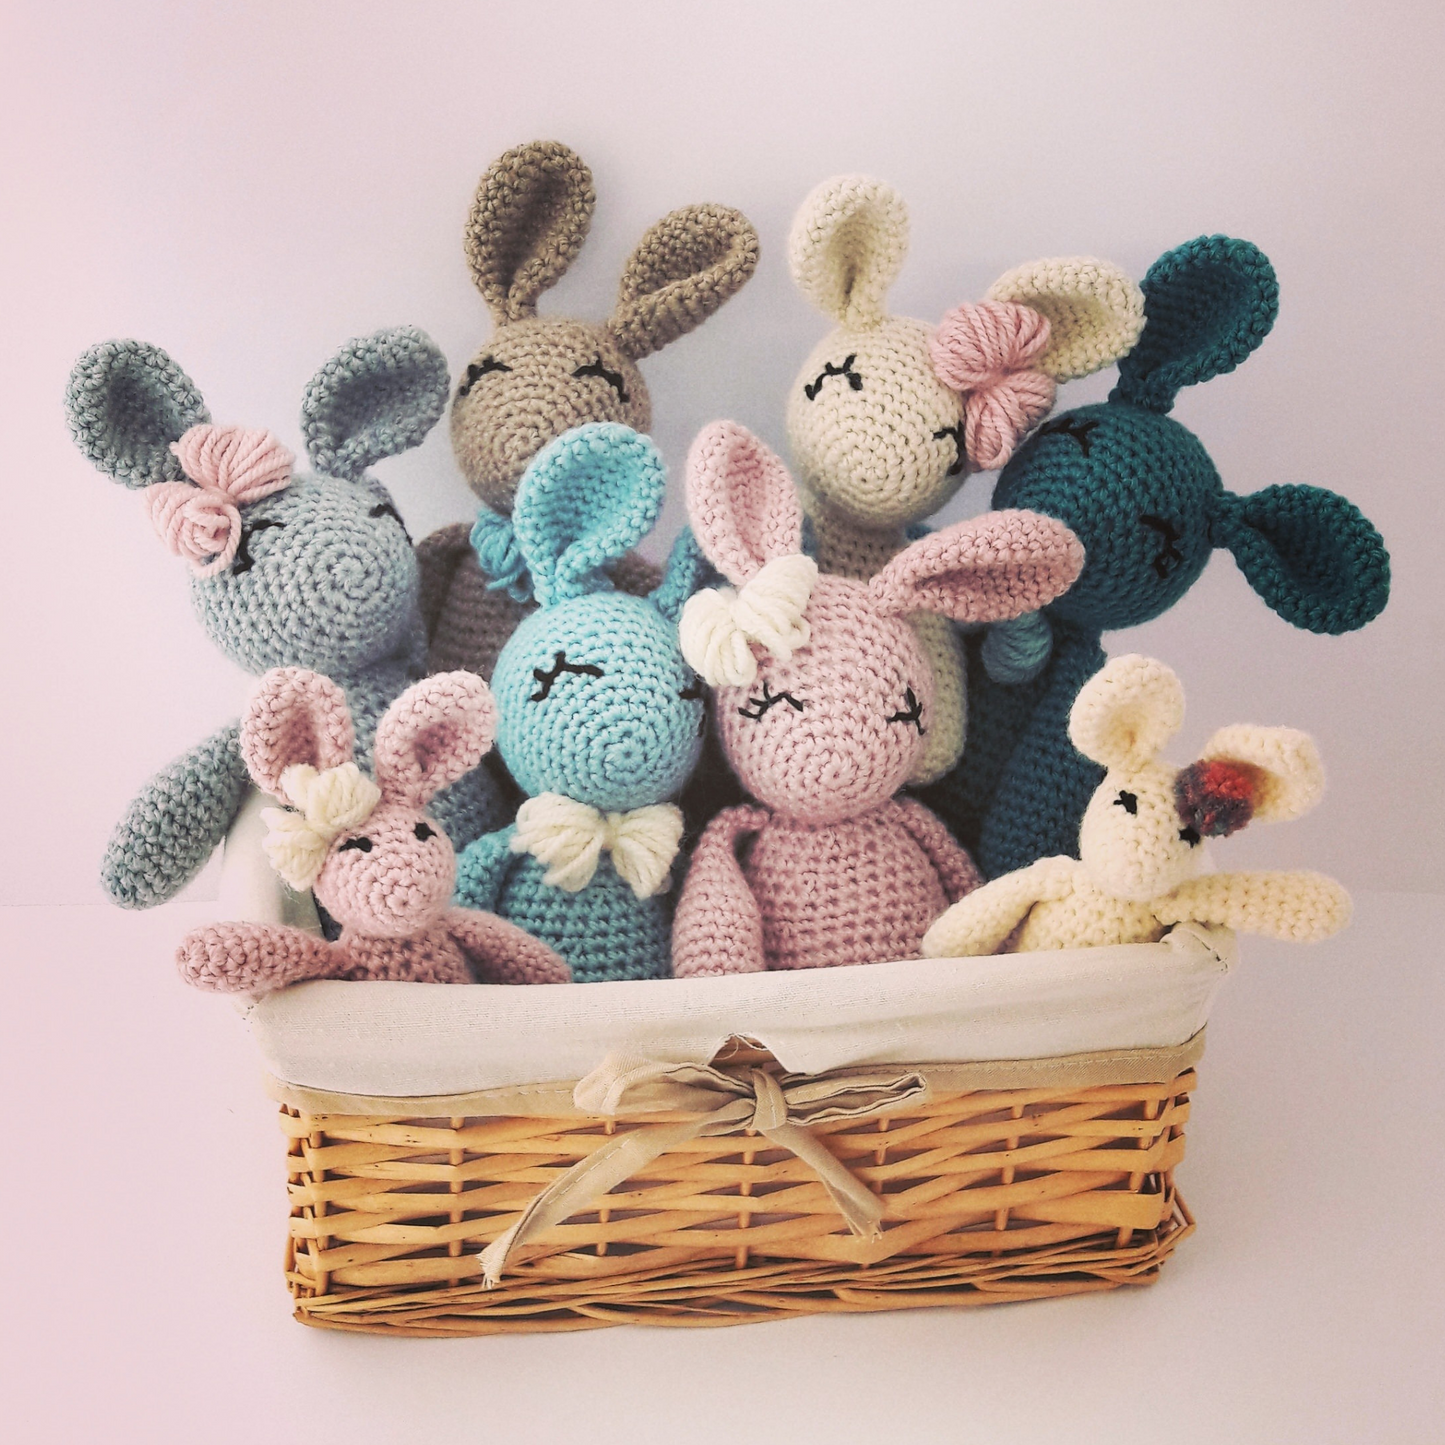 Basket full of crochet bunny rabbits